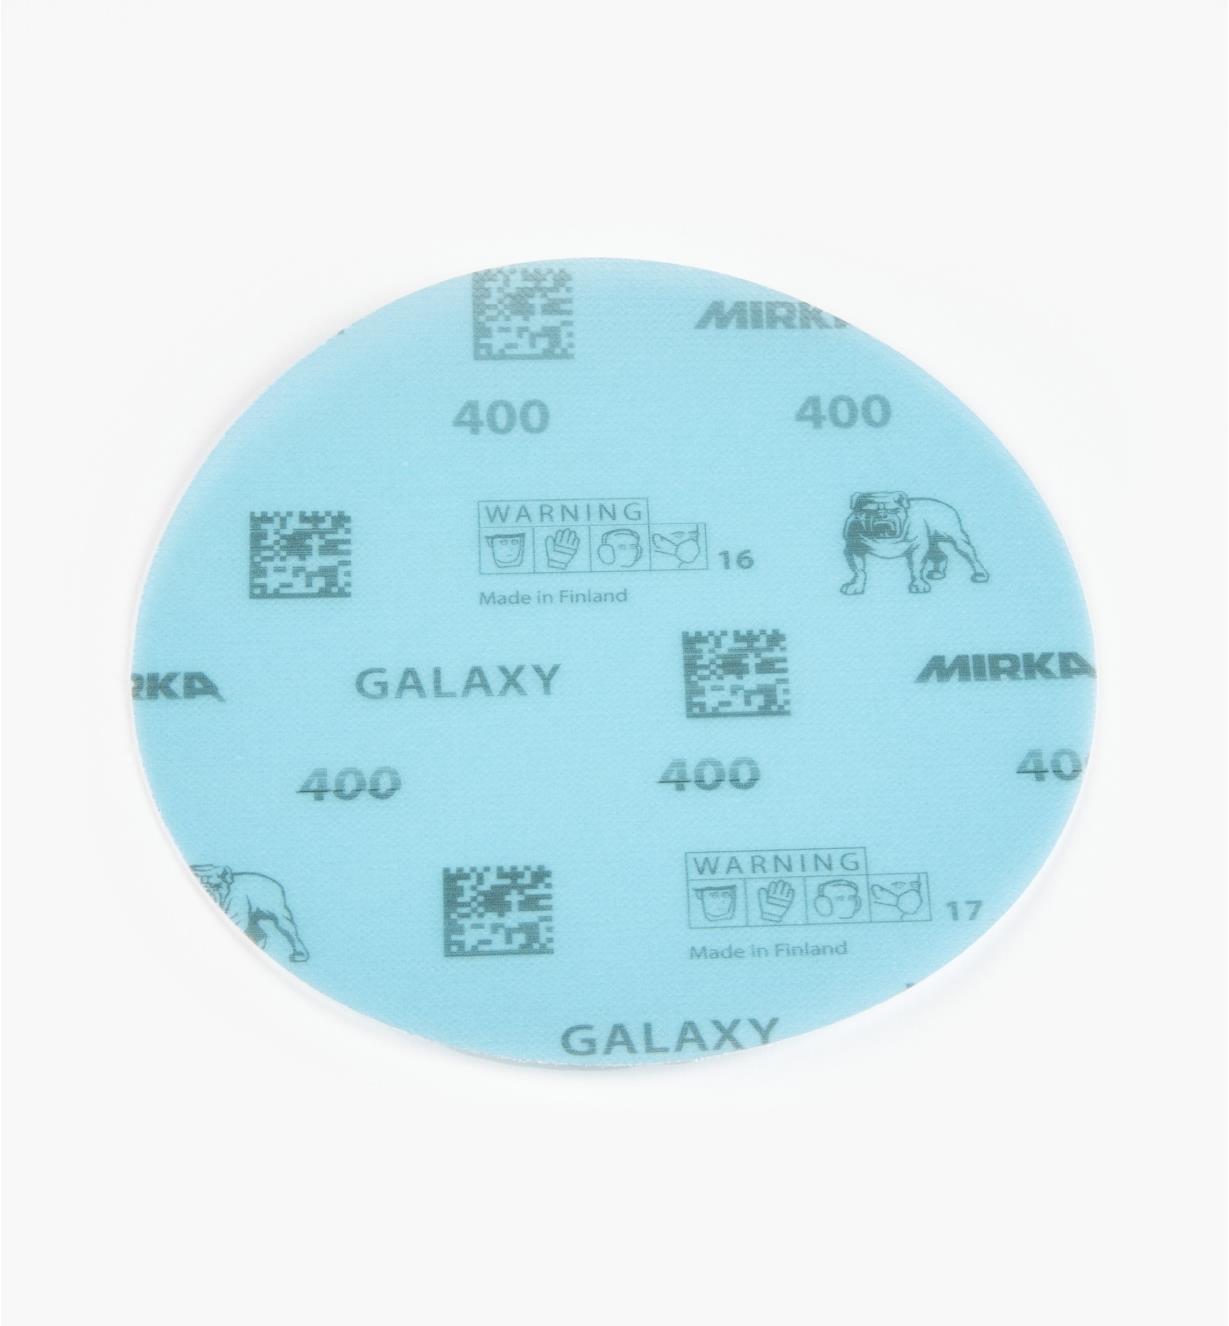 08K2111 - 400x 6" Mirka Galaxy Grip Disc, ea.